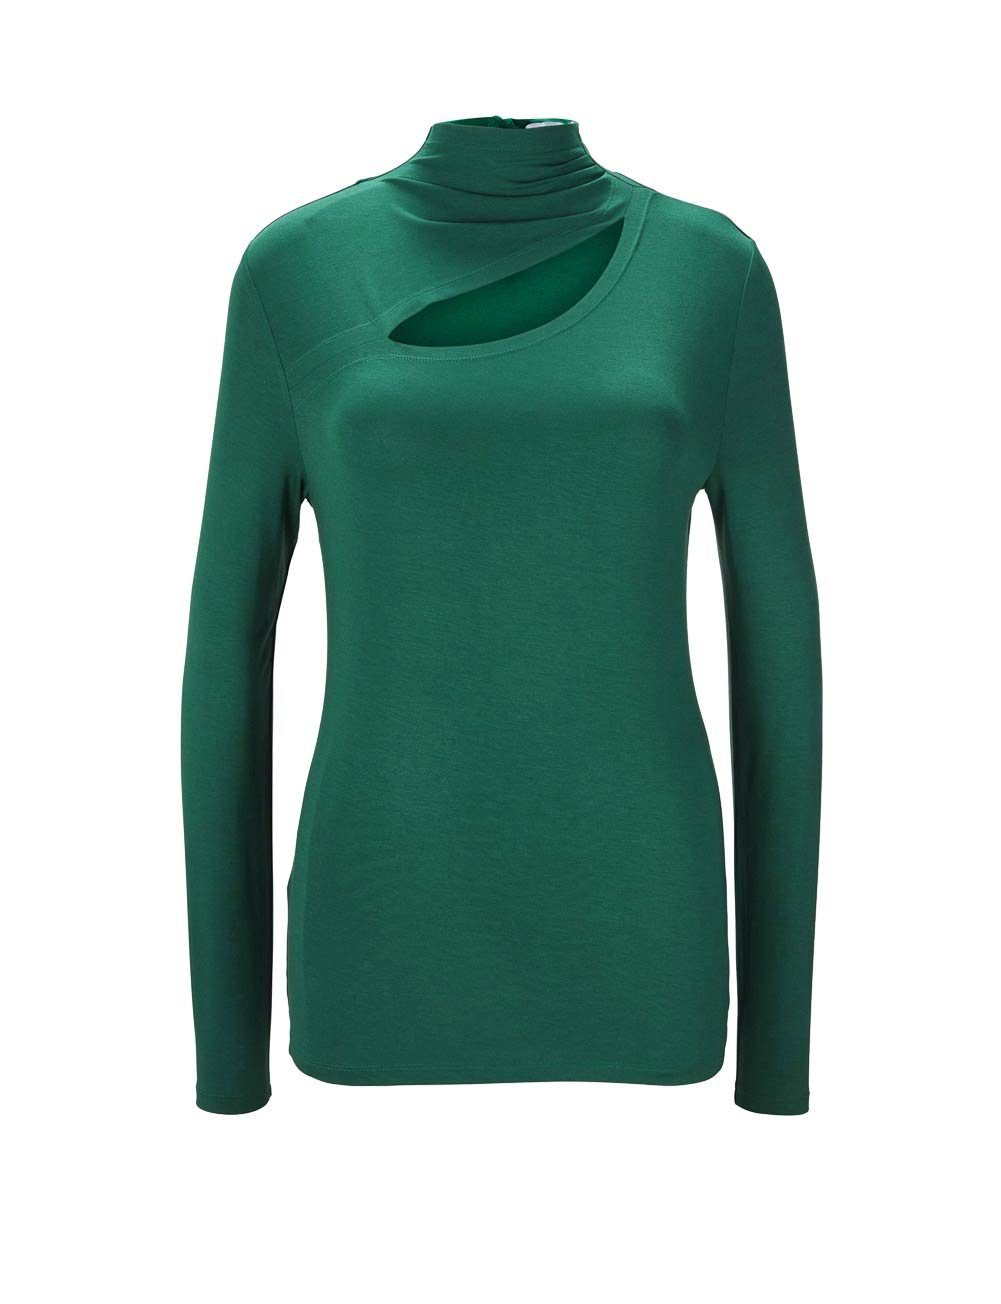 Ashley Brooke by heine T-Shirt ASHLEY BROOKE Damen Designer-Jerseyshirt mit Cut-Out, grün